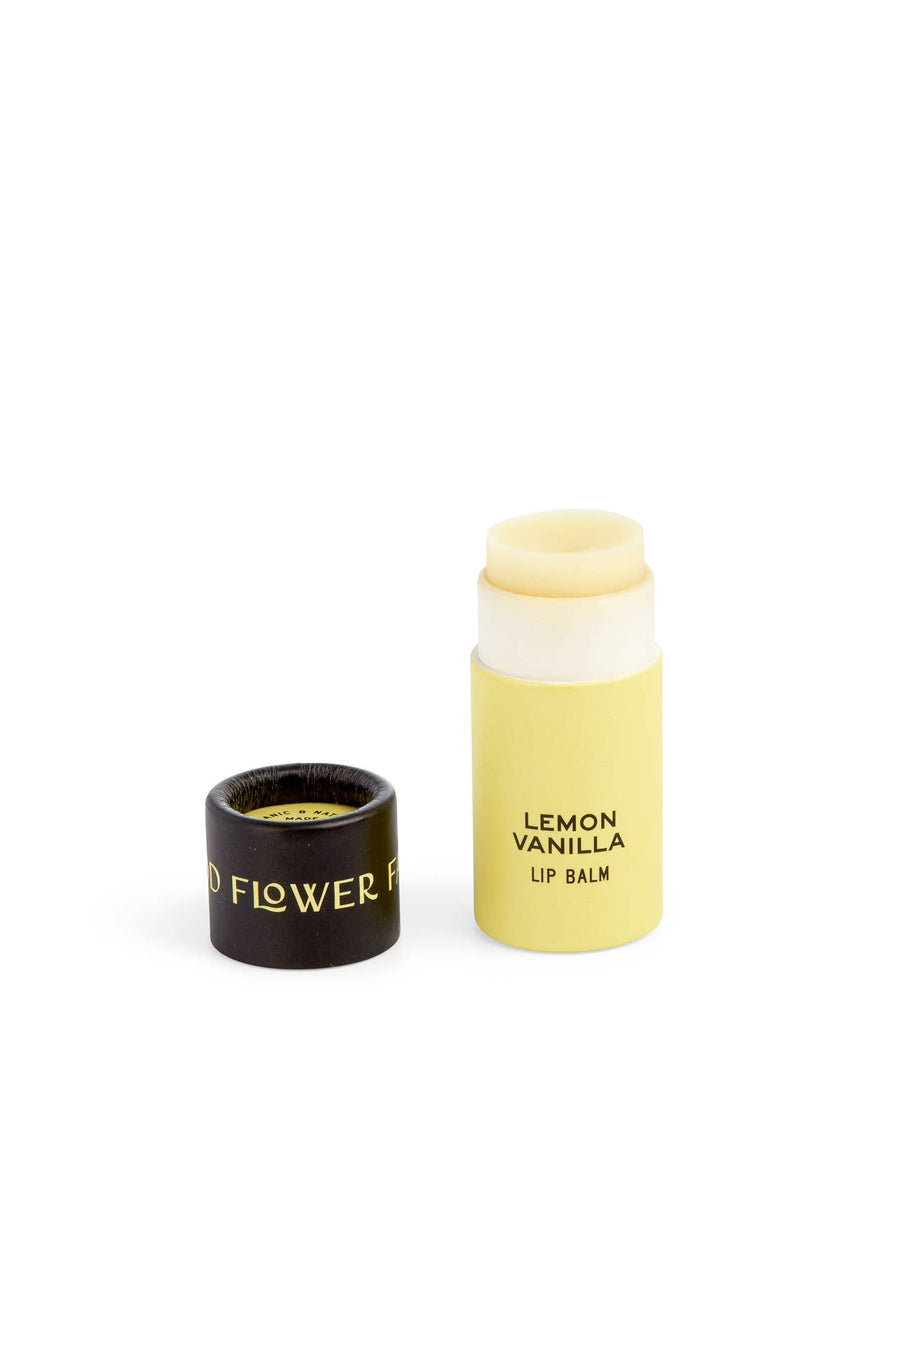 Good Flower Farm - Lemon Vanilla Lip Balm / 0.3 oz Biodegradable Tube